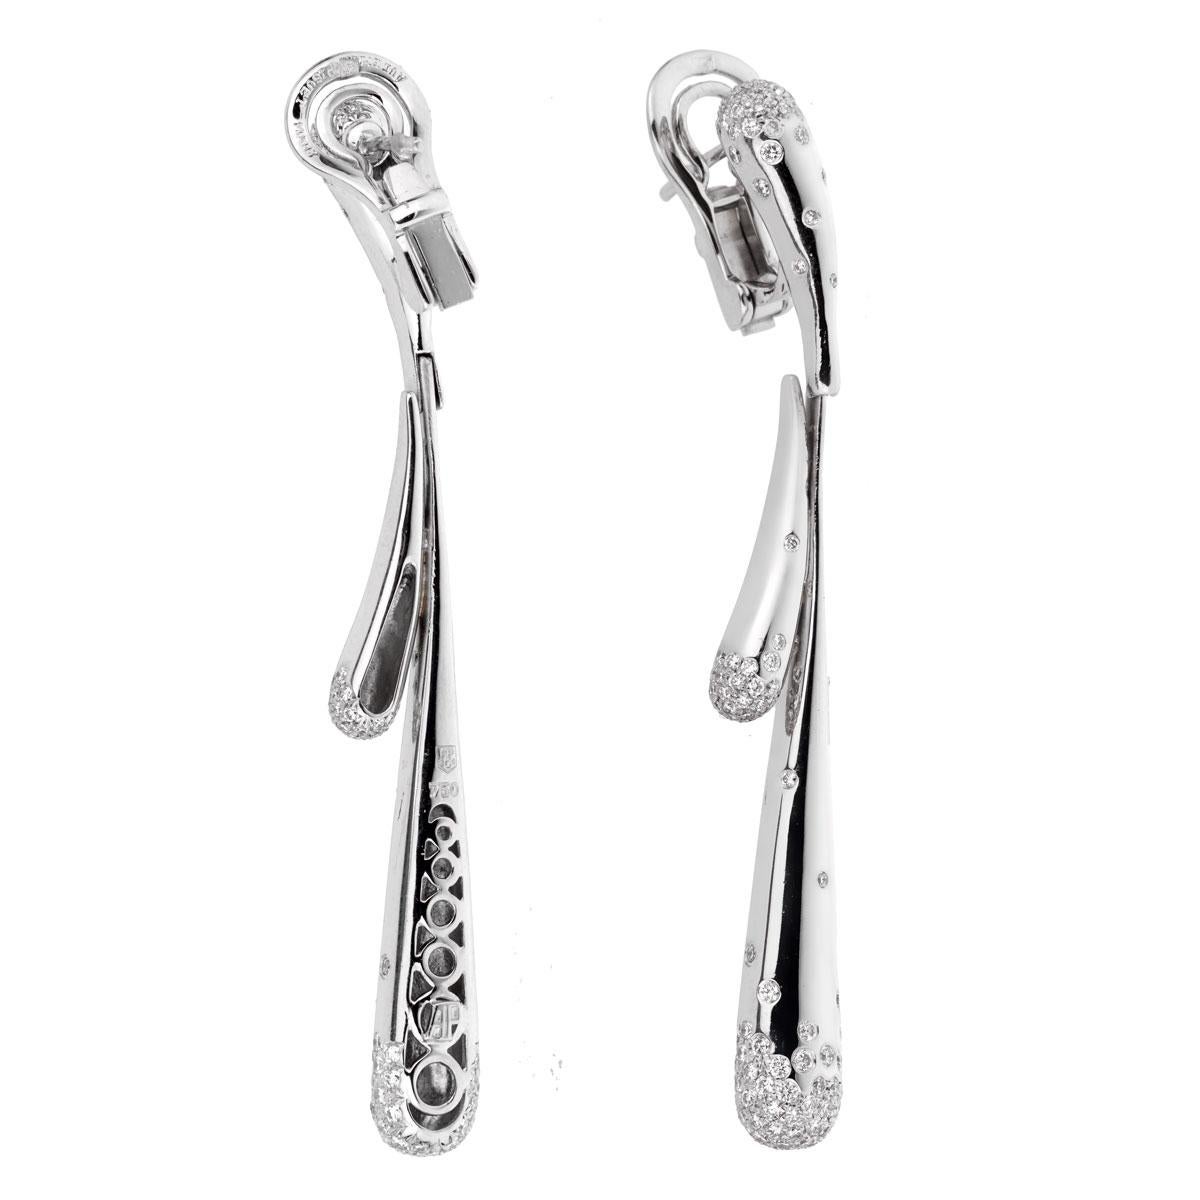 An elegant pair of Audemars Piguet diamond earrings, 2 cascading drops set with the finest Audemars Piguet diamonds in 18k white gold.

Earrings drop: 2.36